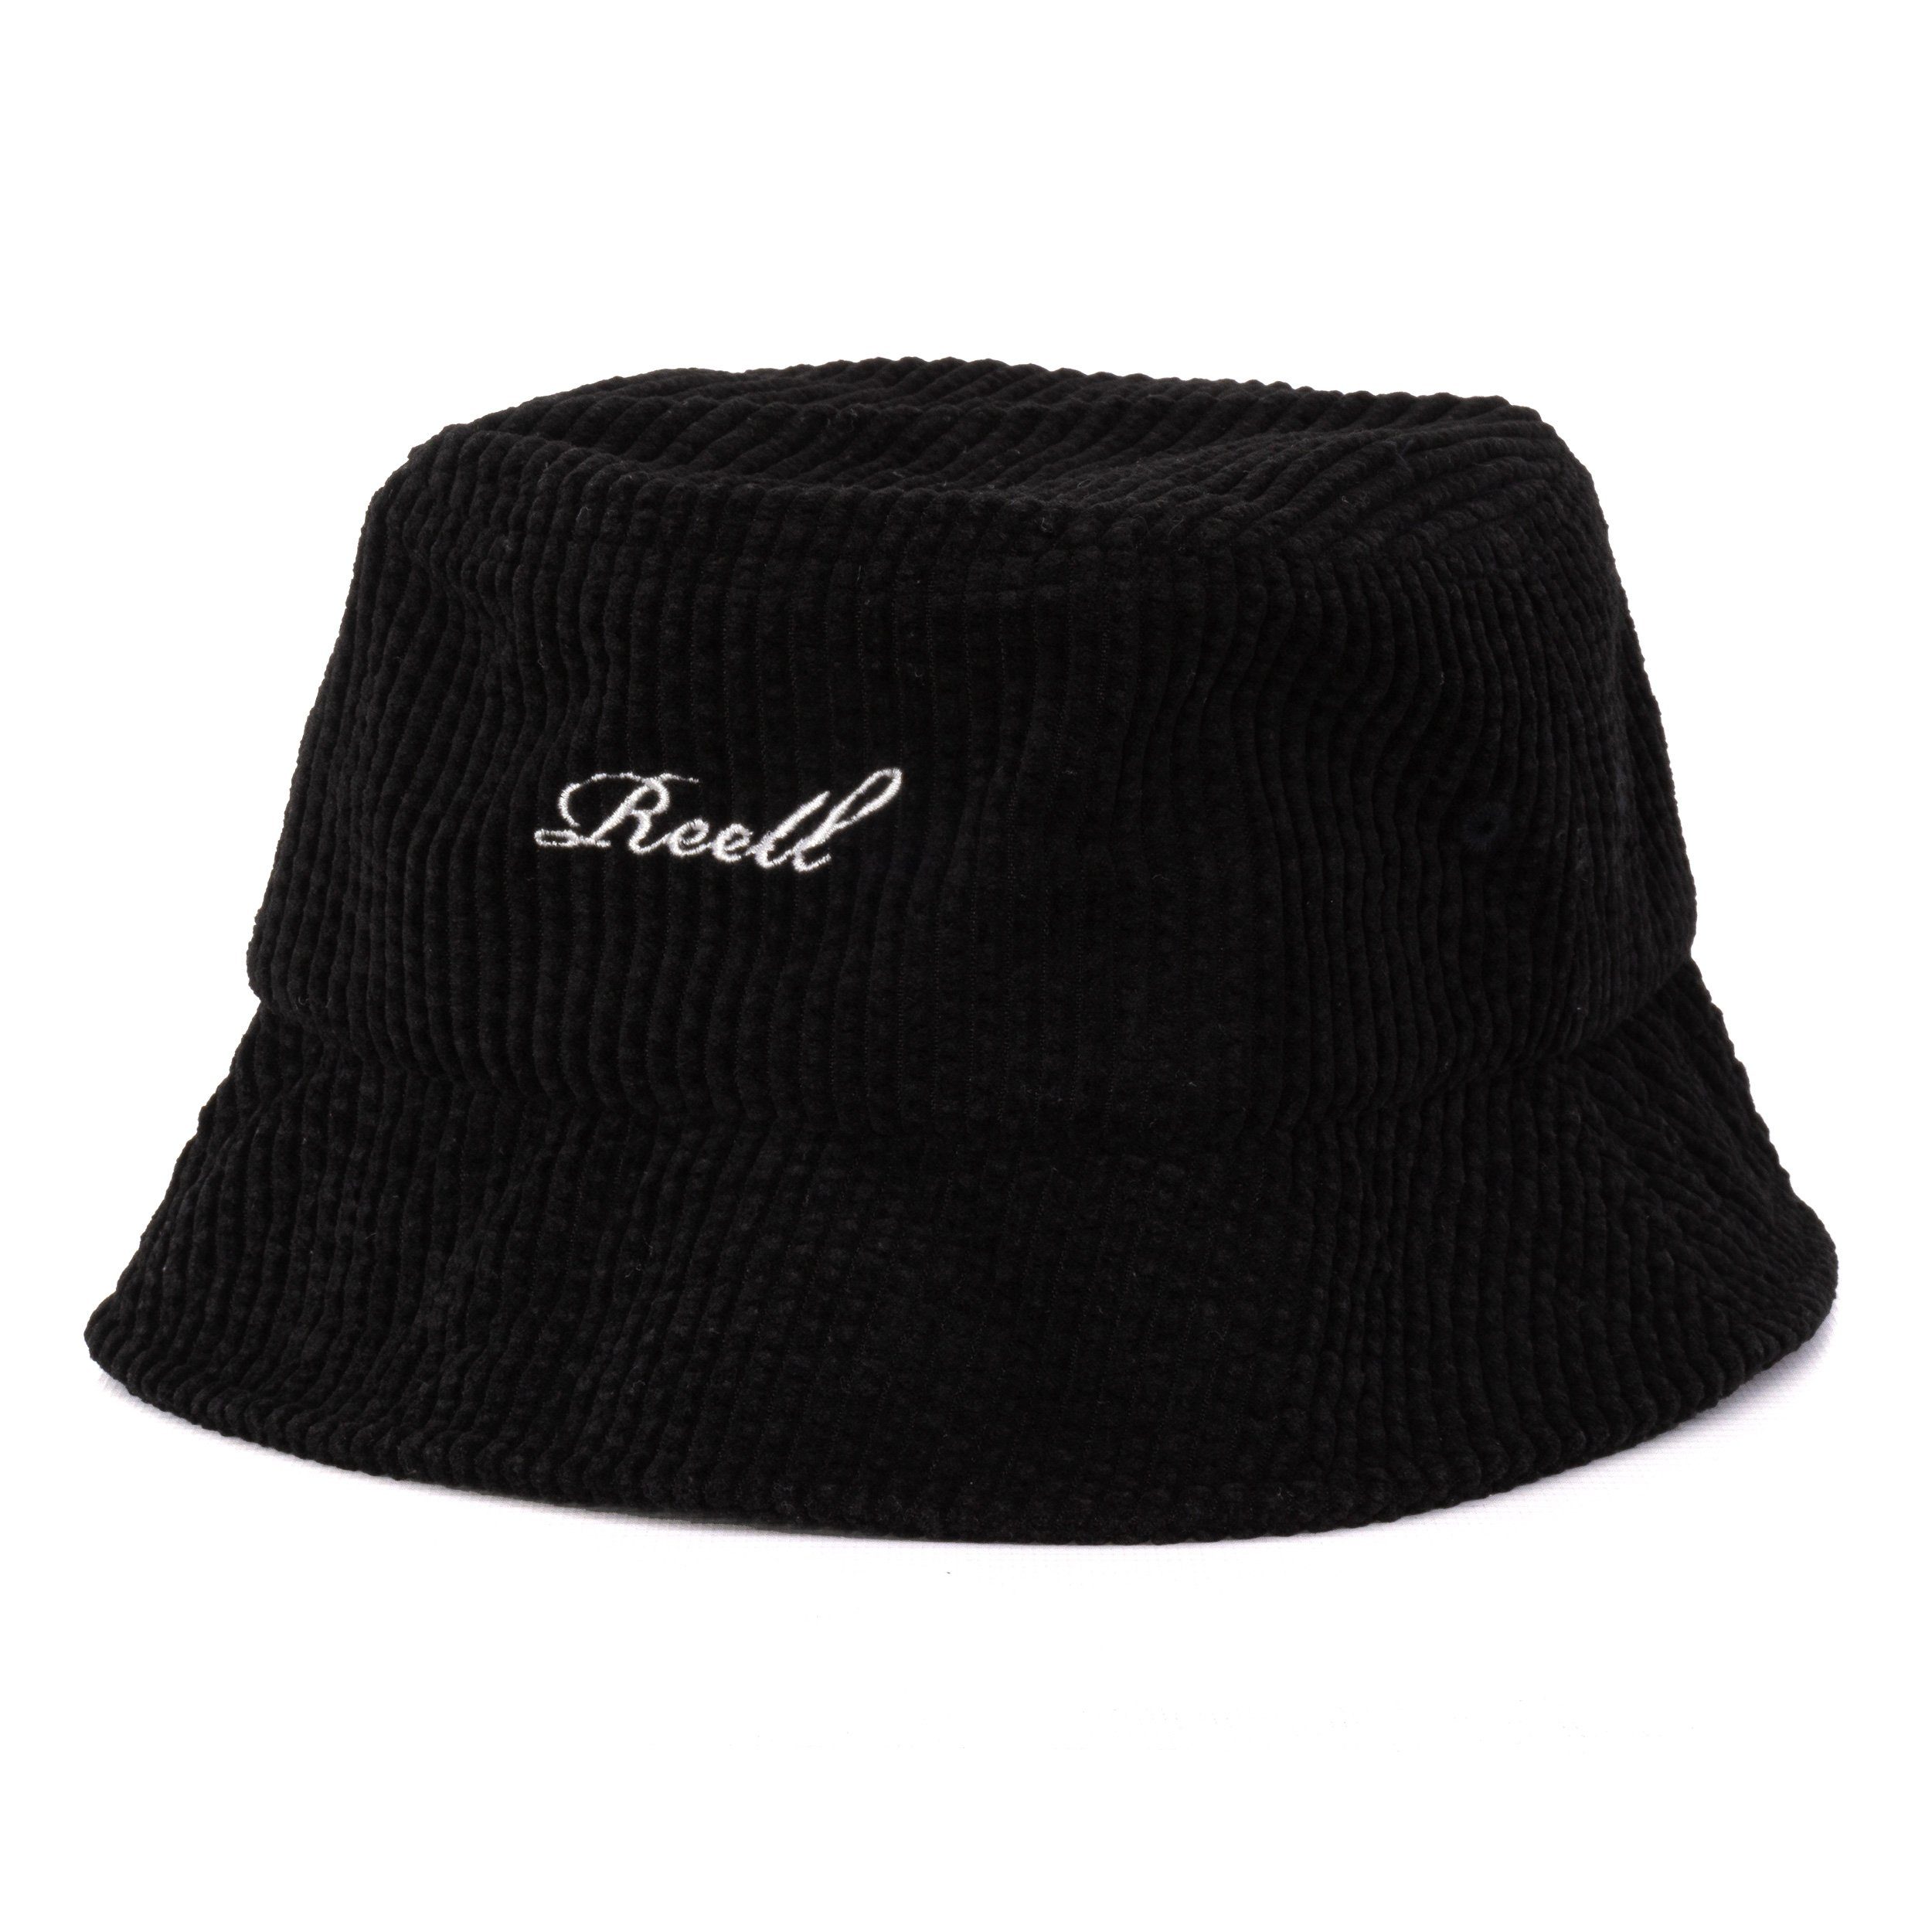 REELL Fischerhut Hut Reell Bucket Hat black